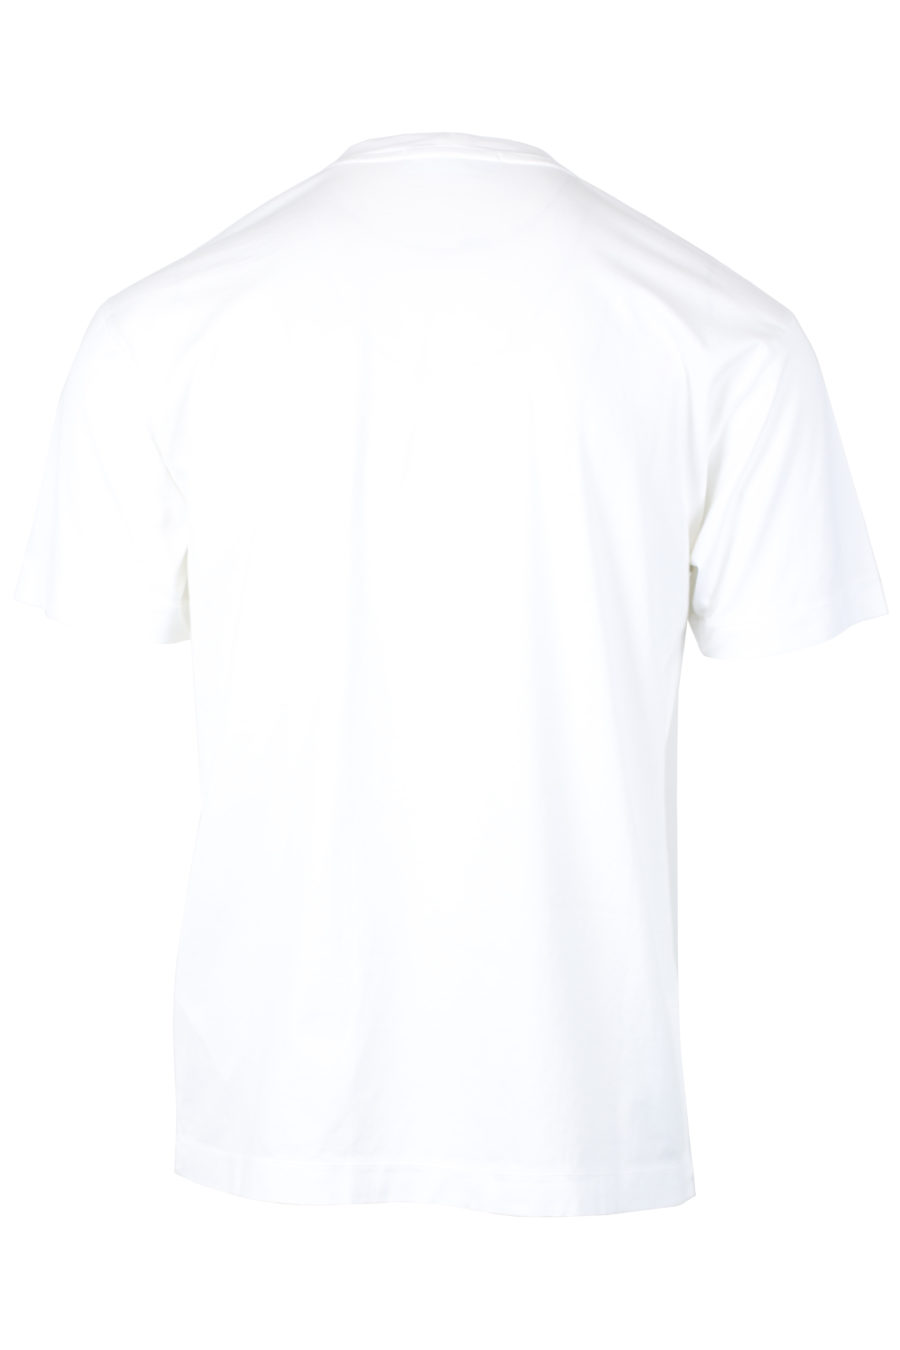 Camiseta blanca con parche - IMG 2493